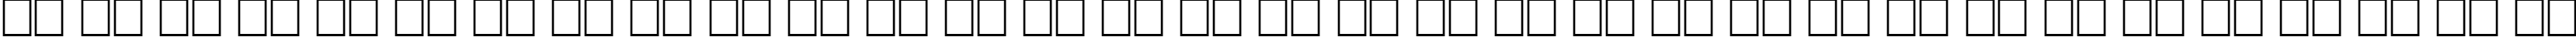 Пример написания русского алфавита шрифтом ChocolateBoxDecorative